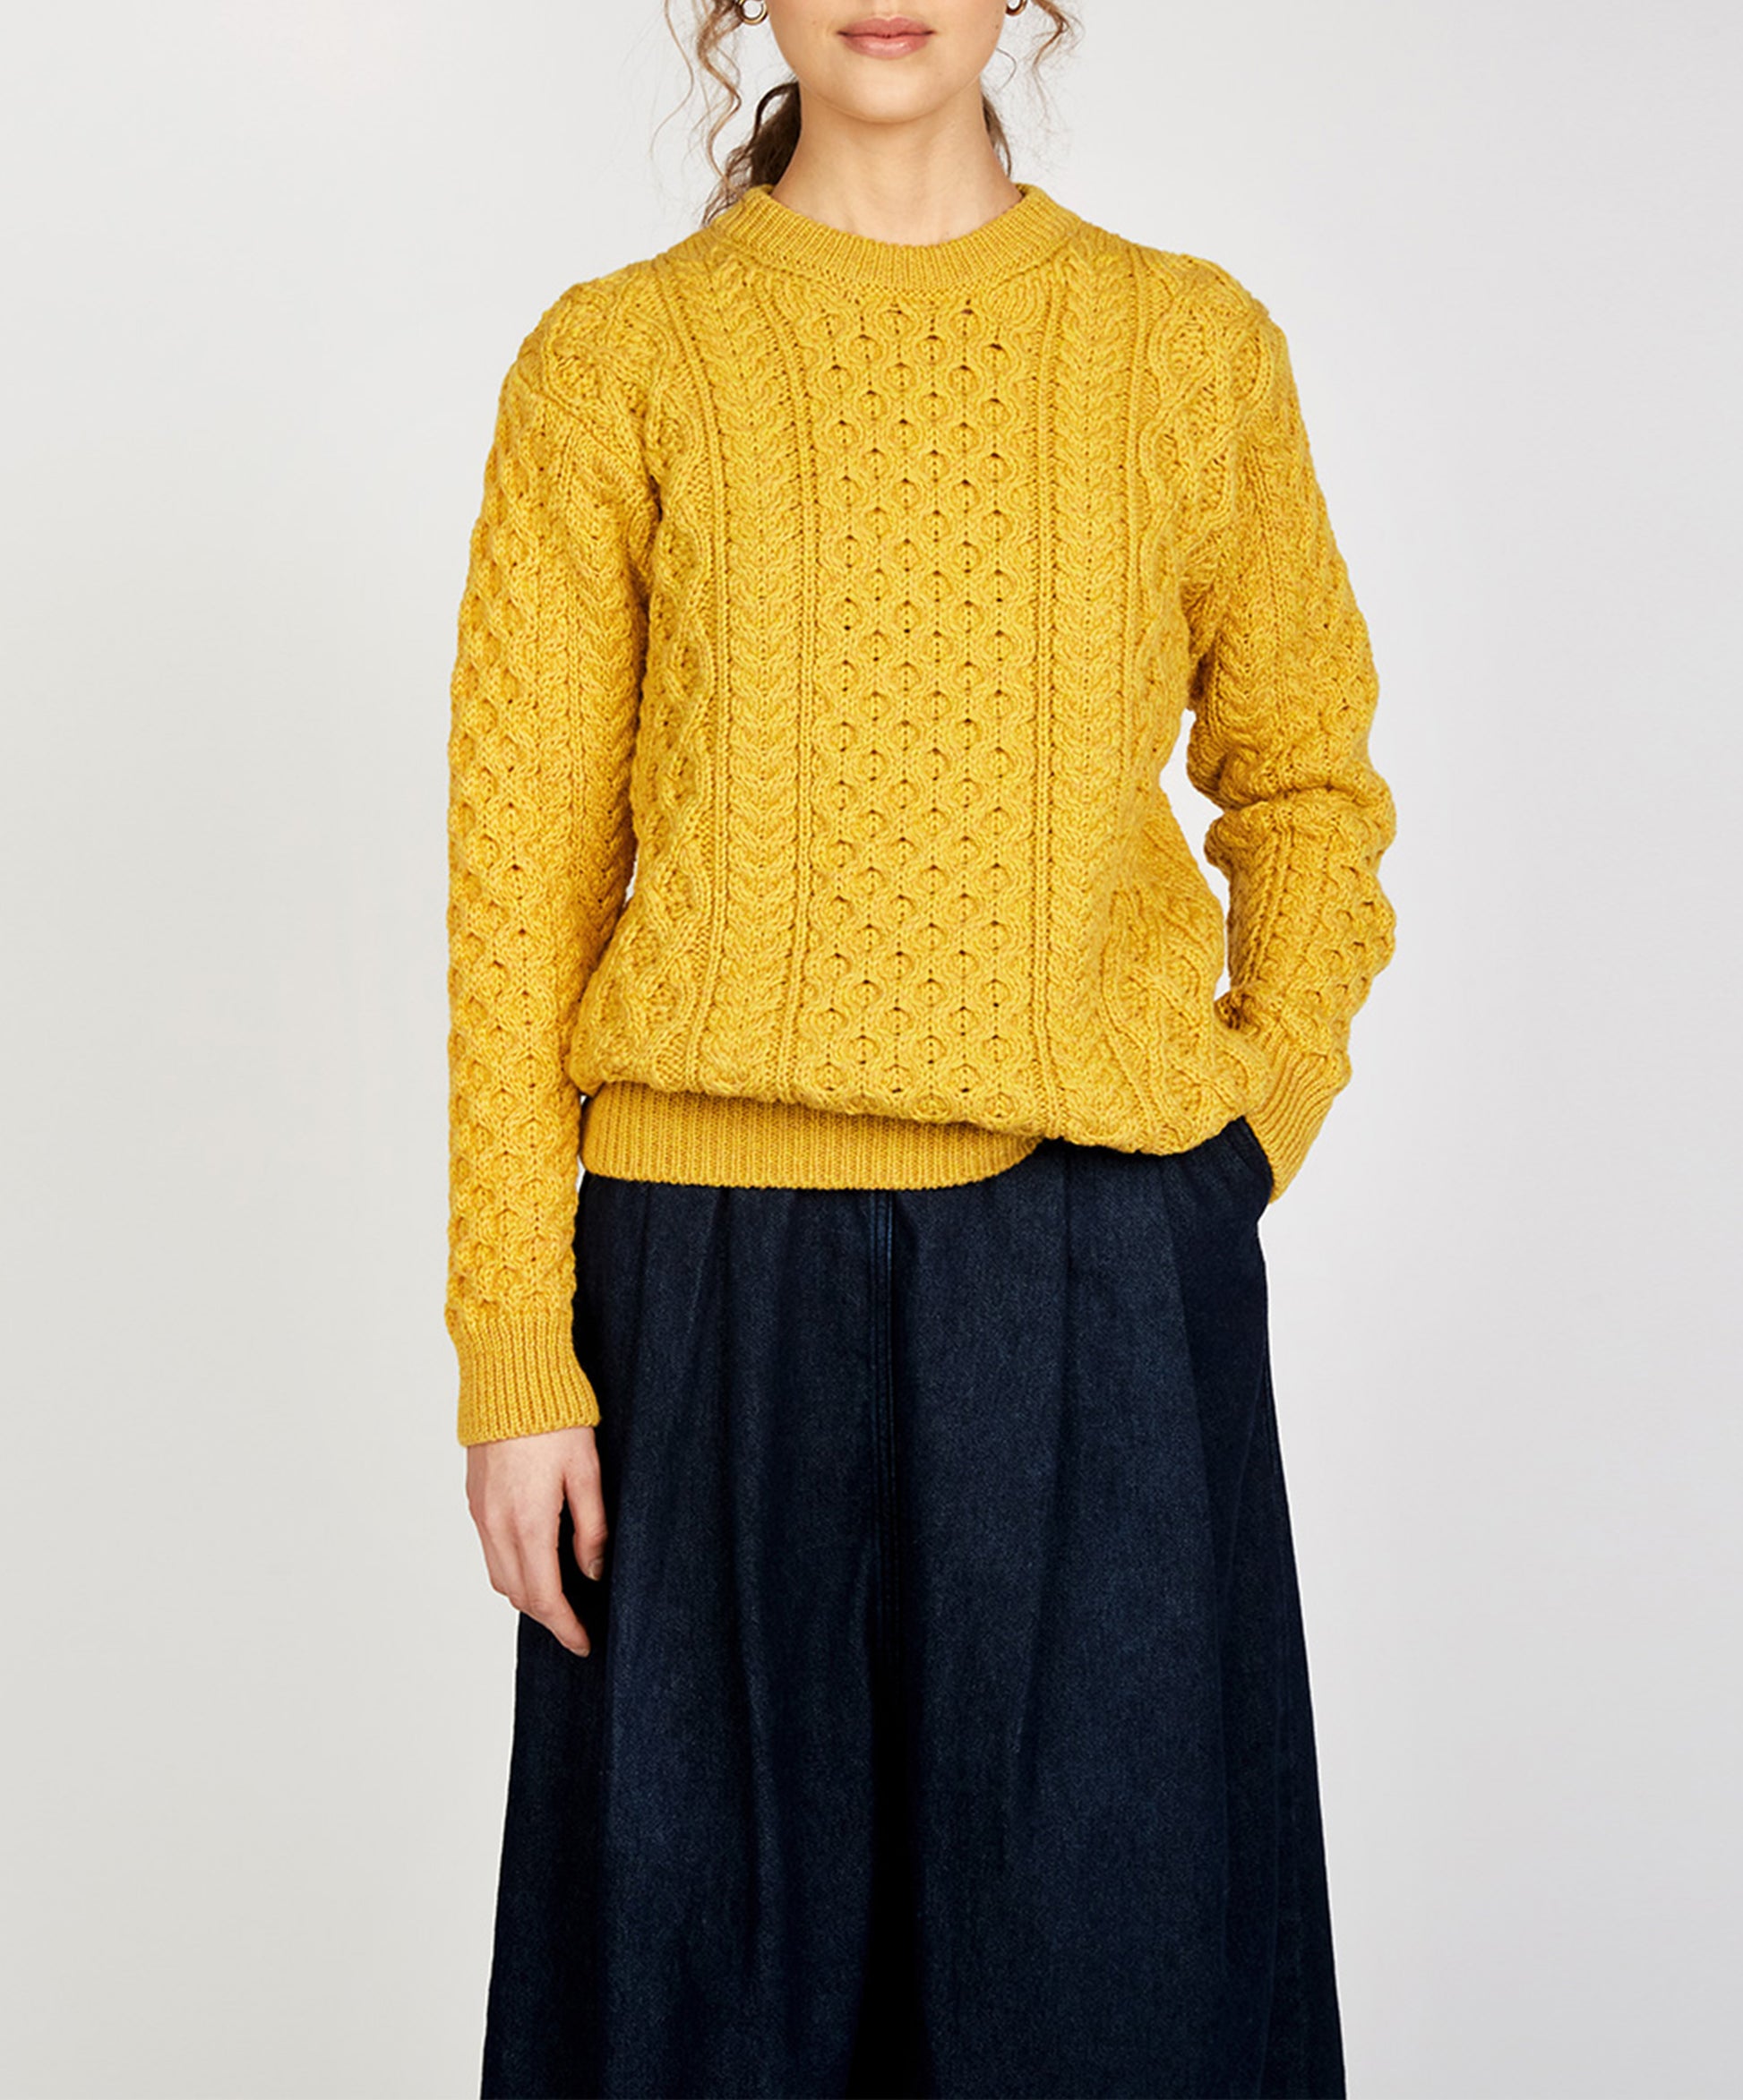 IrelandsEye Knitwear Blasket Honeycomb Stitch Womens Aran Sweater Sunflower